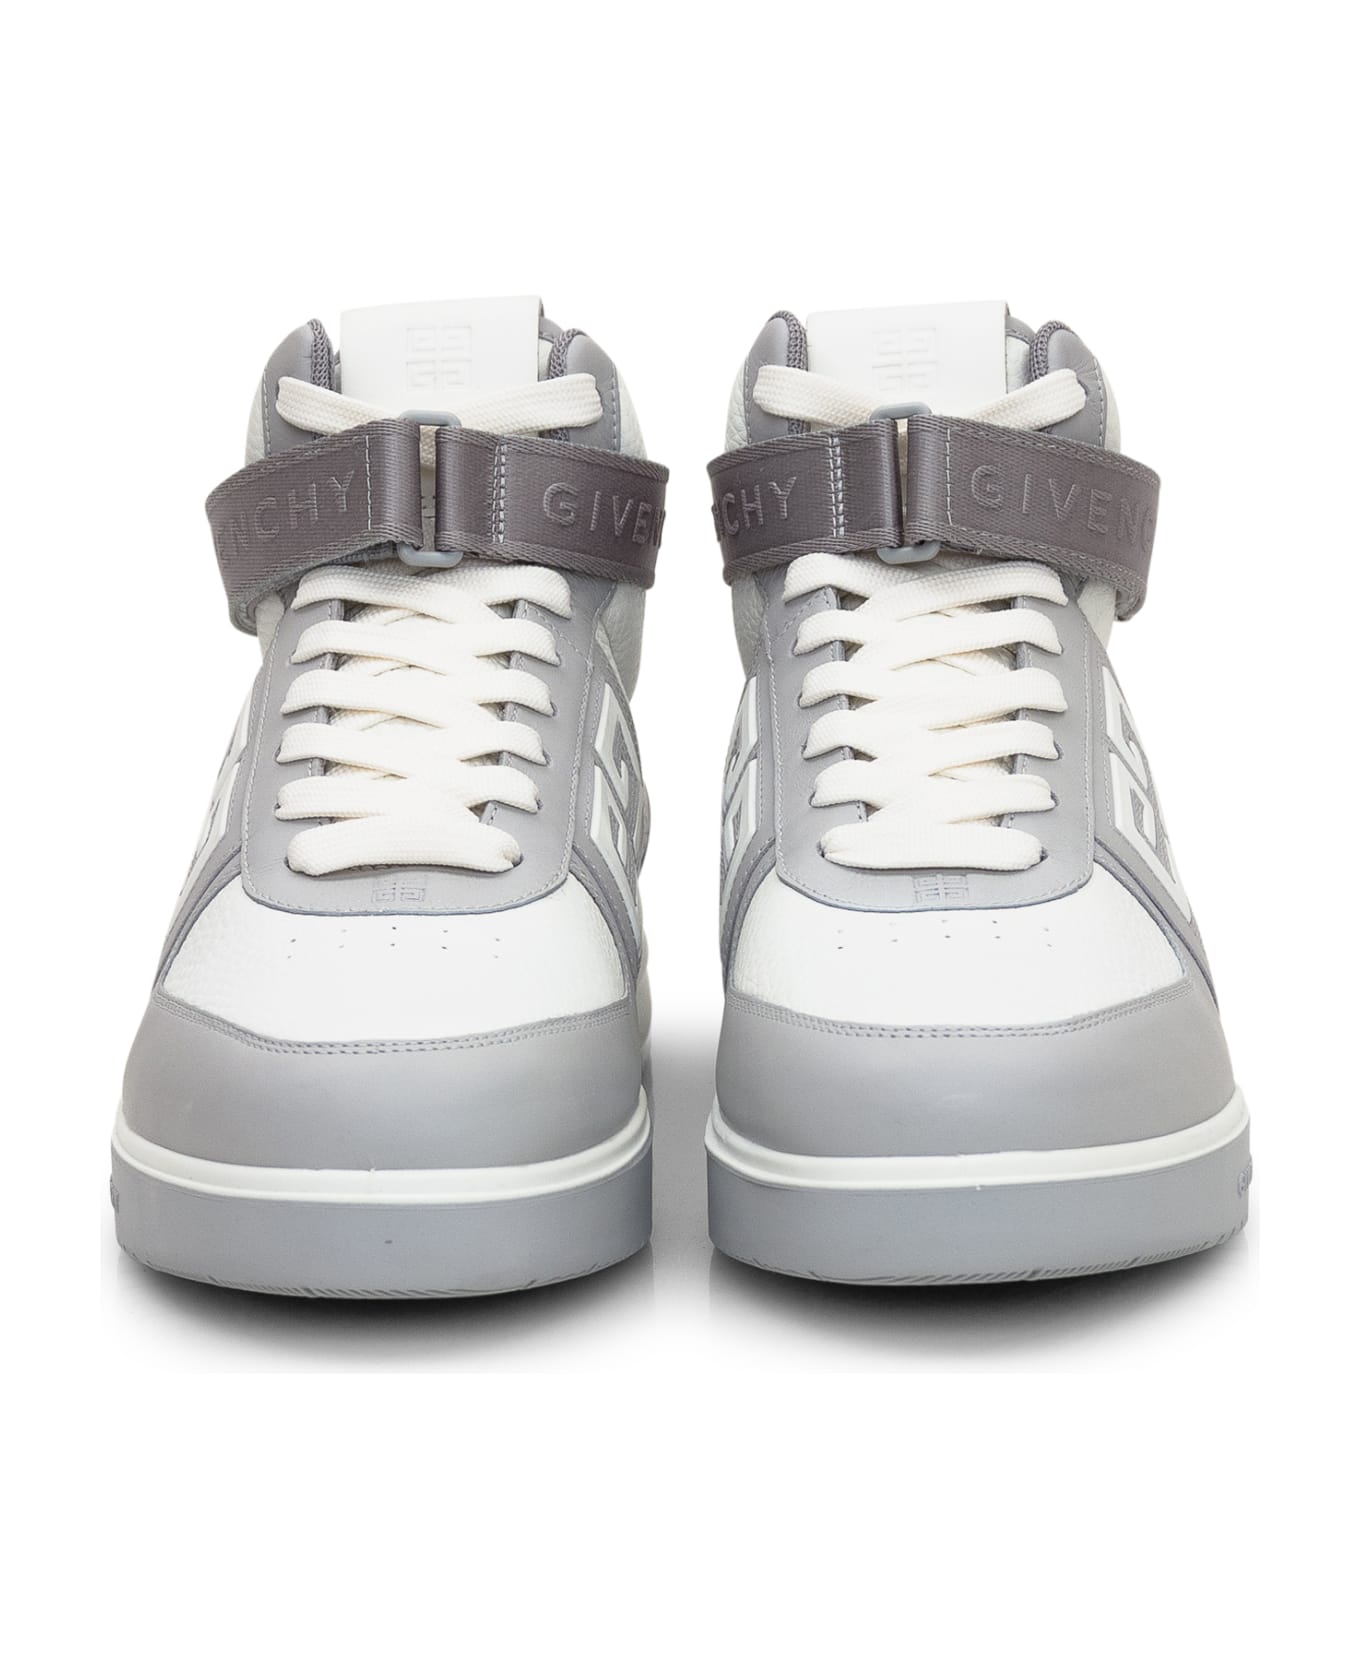 Givenchy G4 High Sneaker - Grey スニーカー